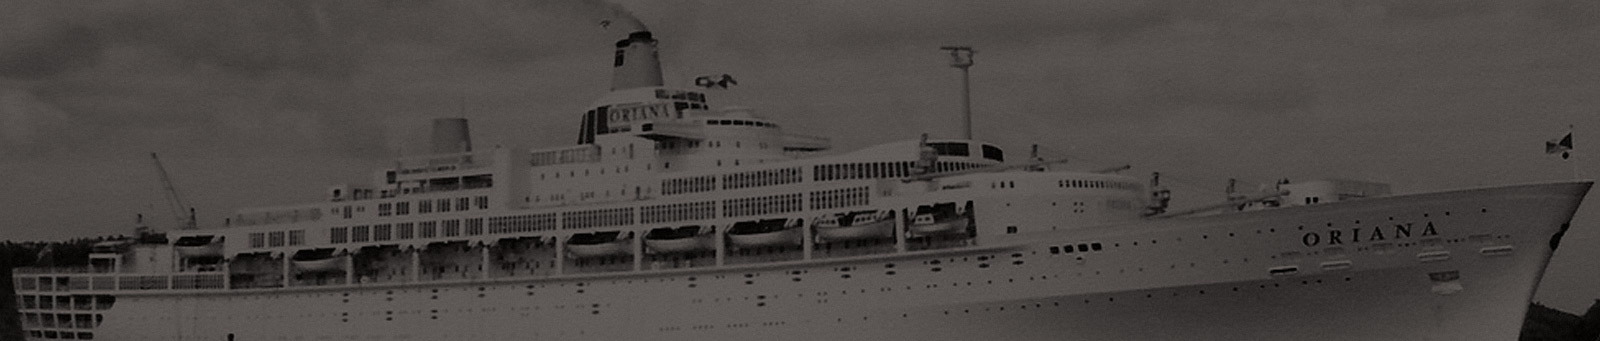 SS Oriana Banner 